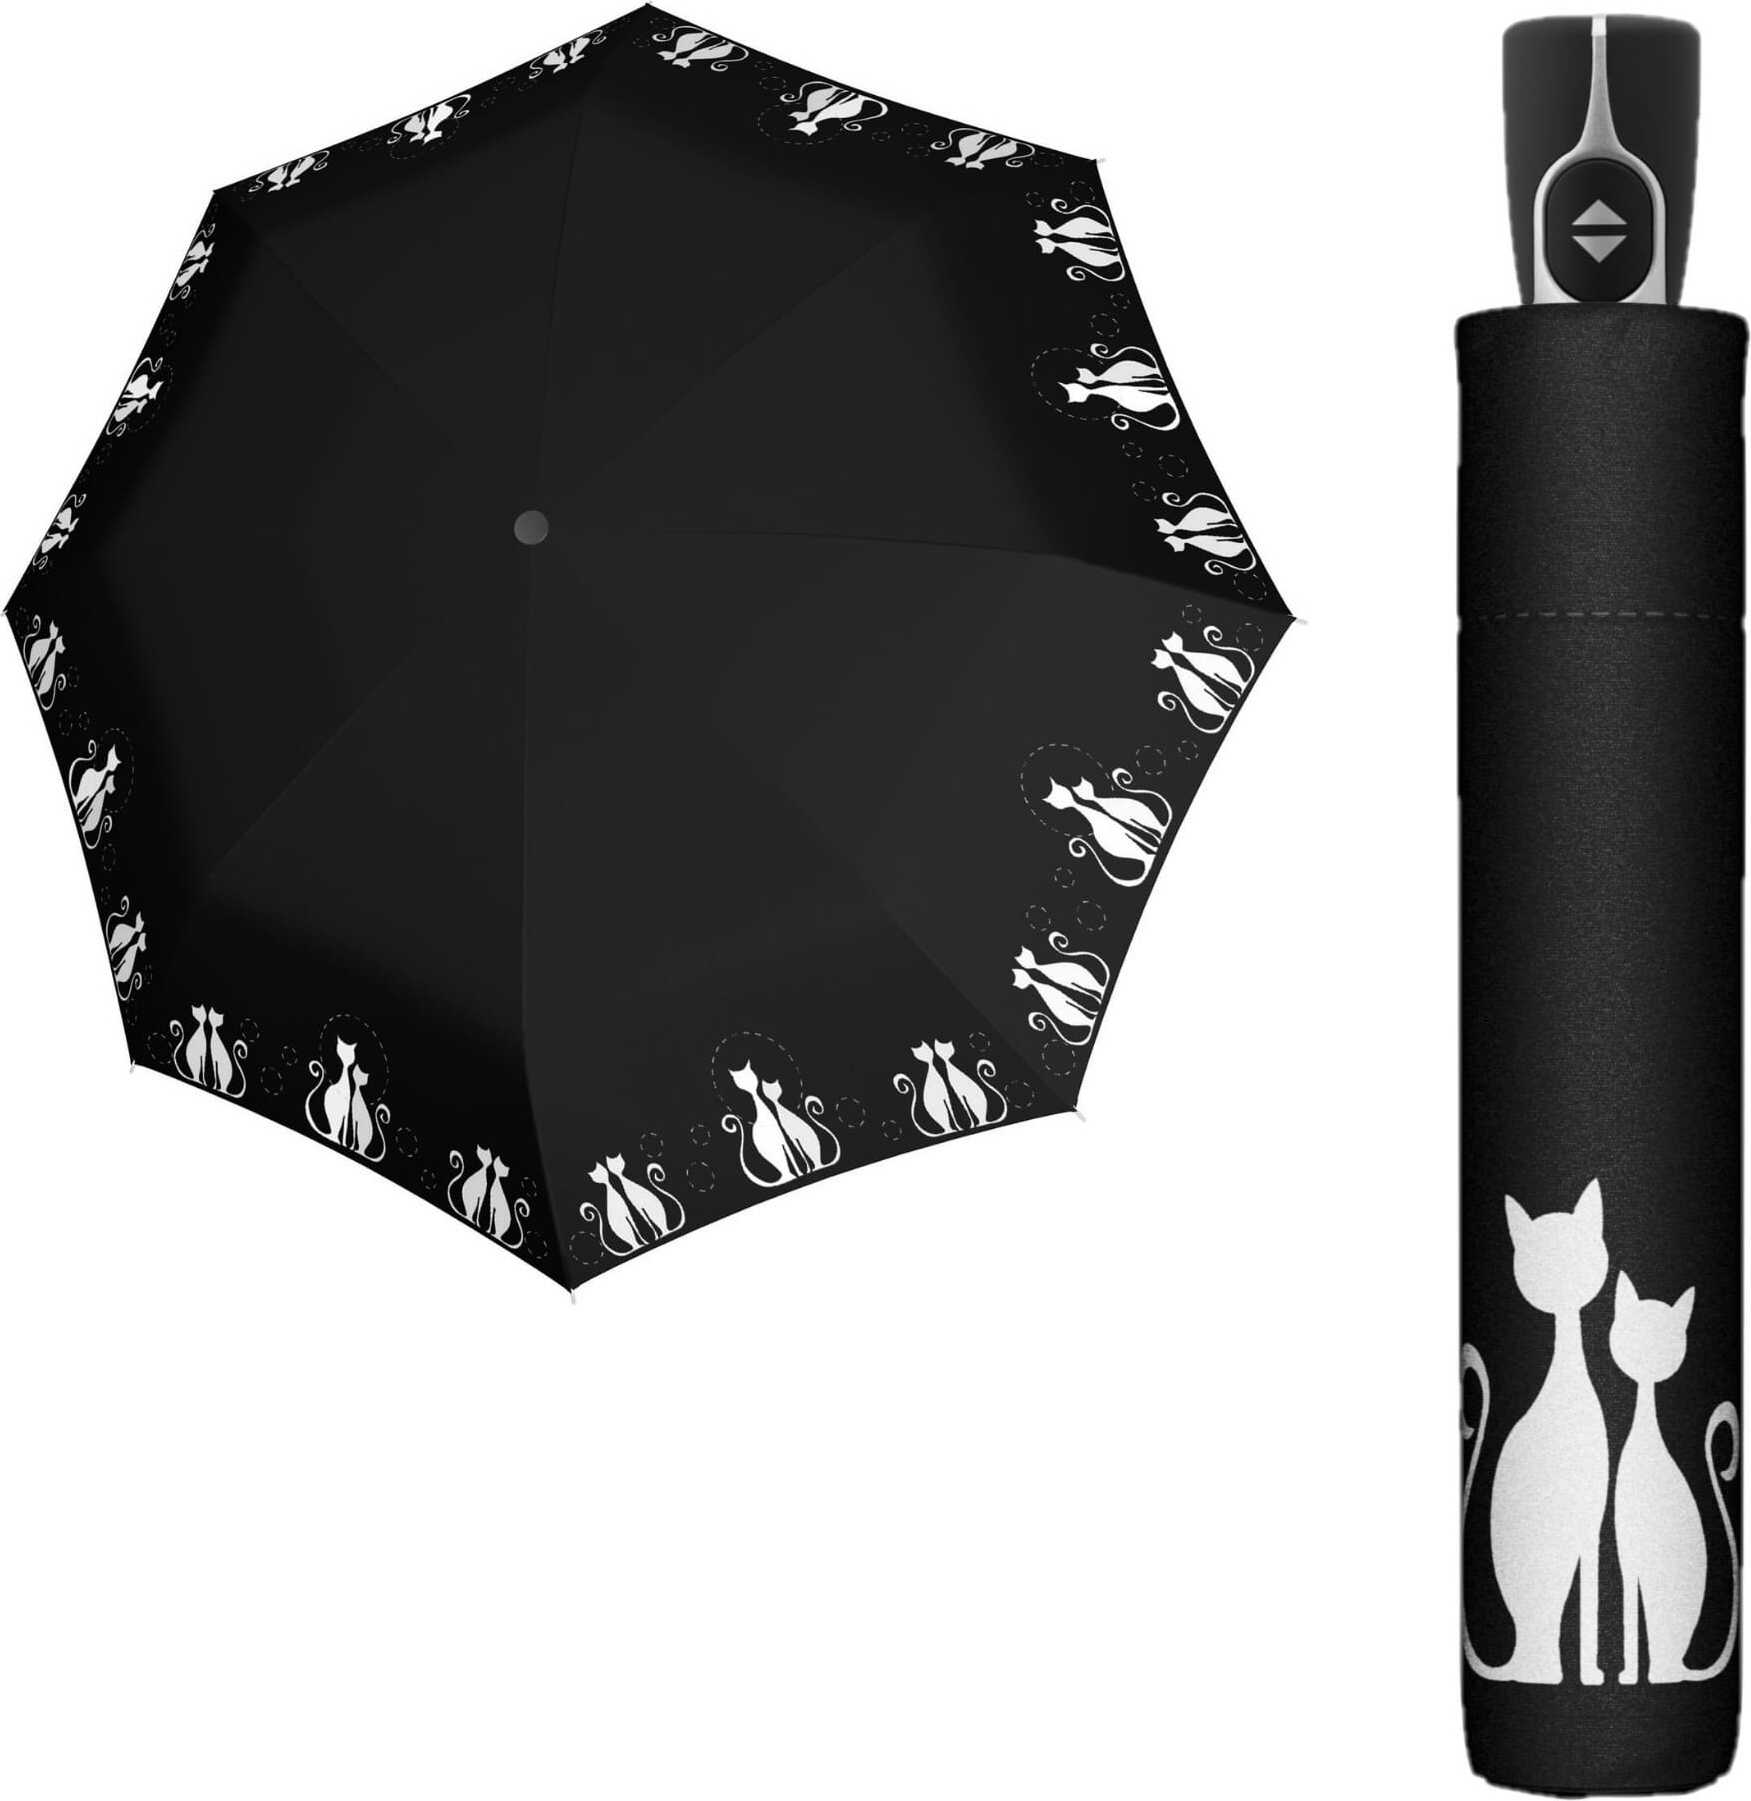 Fiber Magic Timeless Umbrella waistband - Doppler 7441465T03